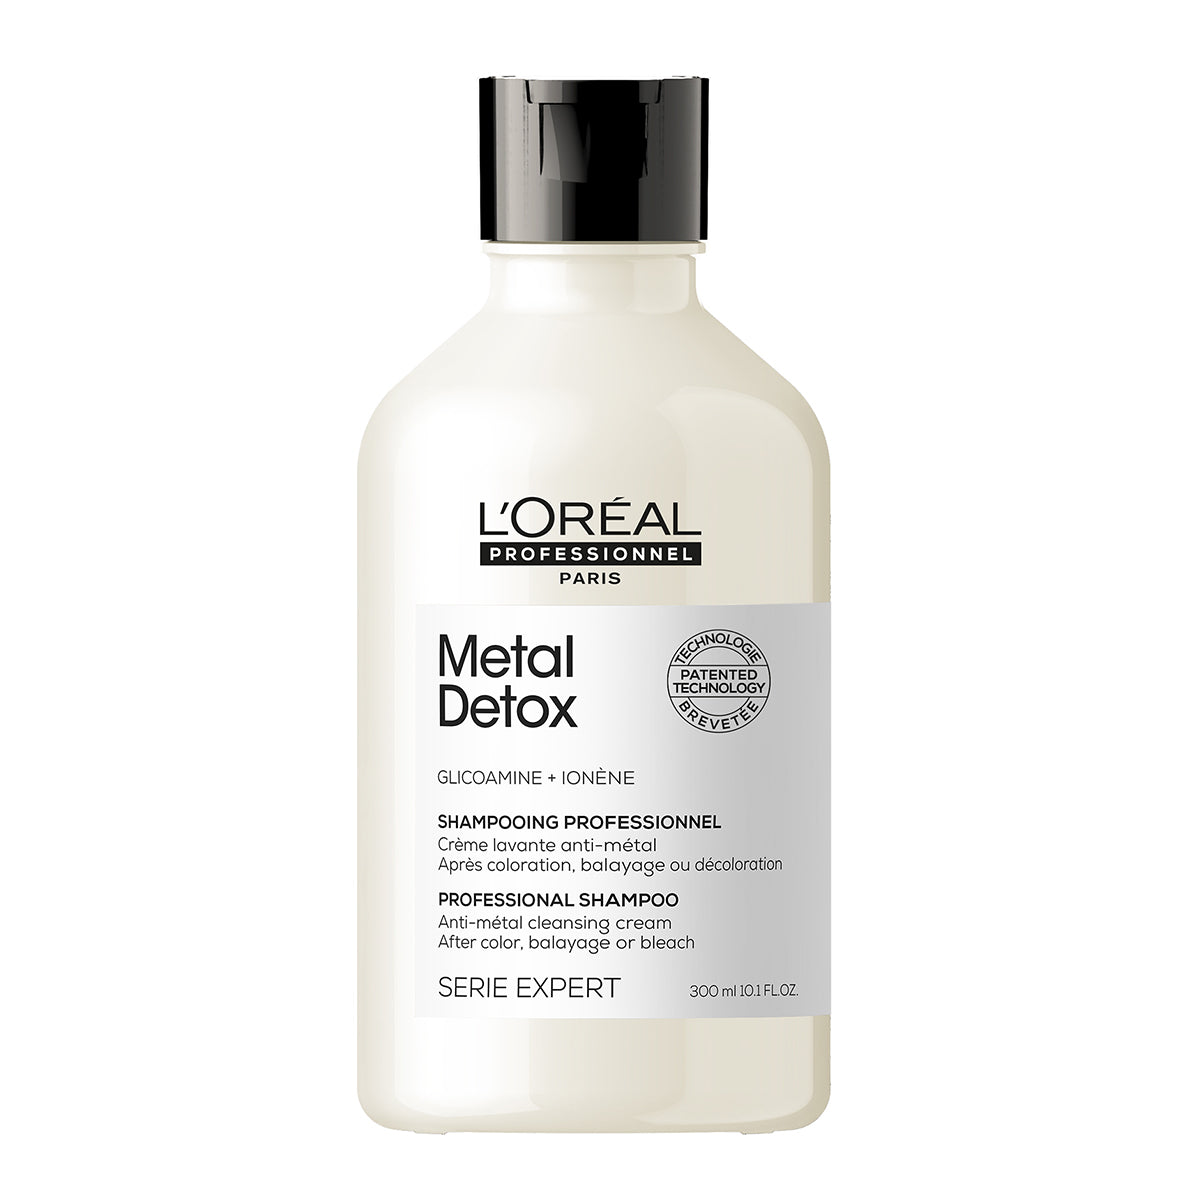 L’Oreal Metal Detox Shampoo